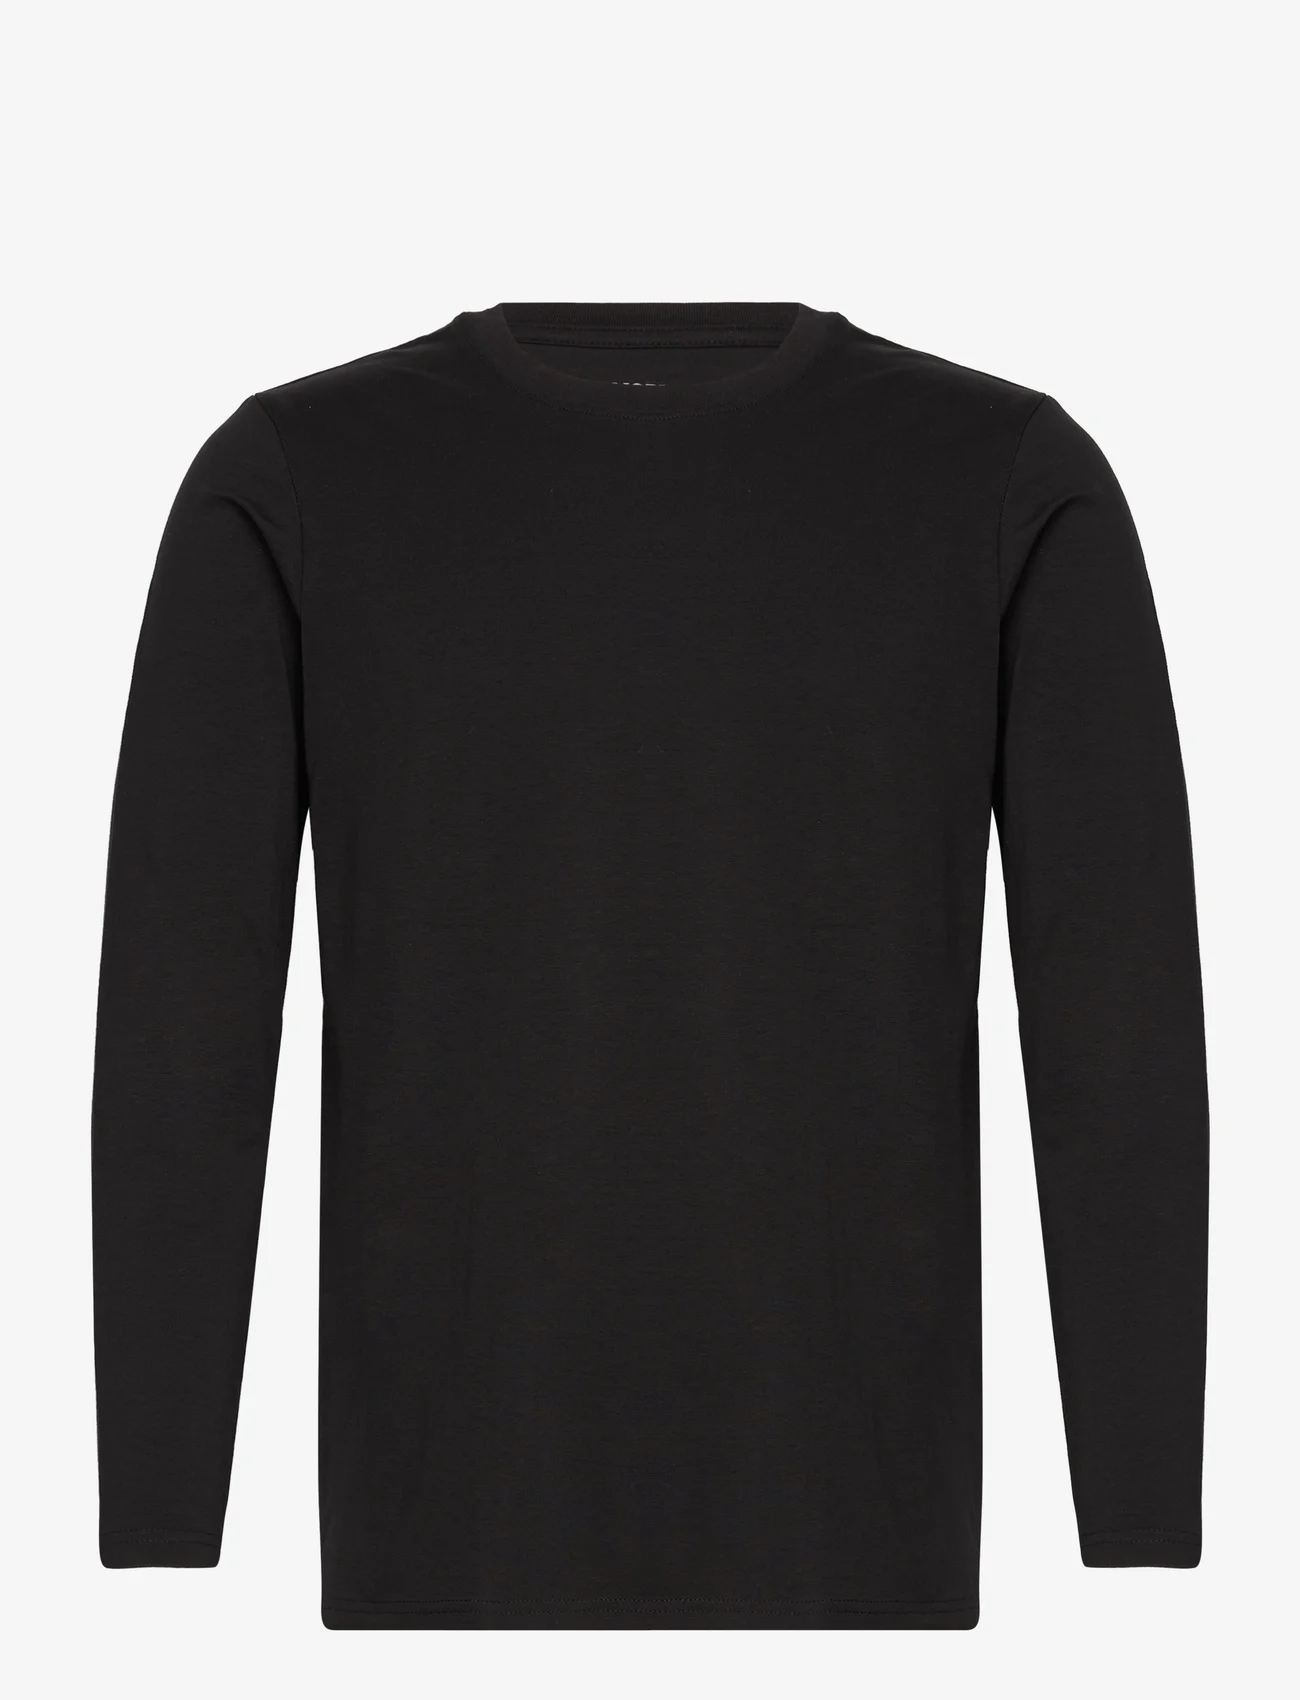 NORVIG - Men's O-neck L/S T-shirt, Cotton/Stretch - zemākās cenas - black - 0